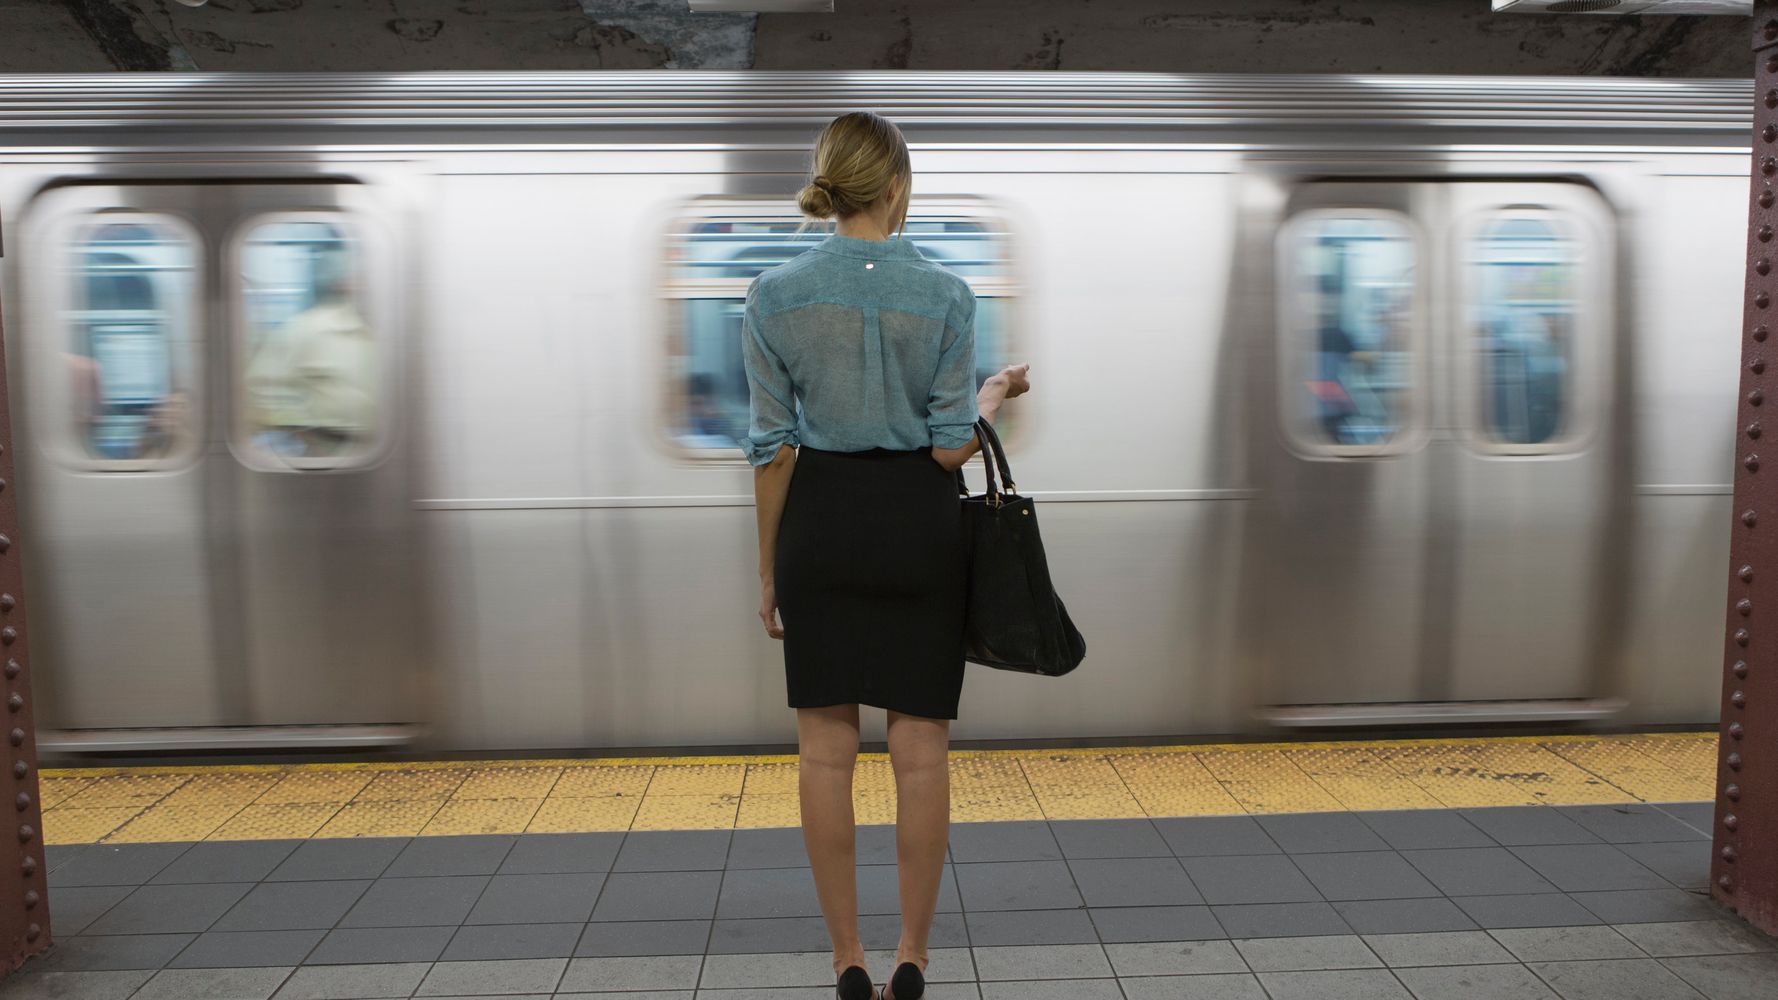 TikTok-viral 'subway shirts' won't stop harassment